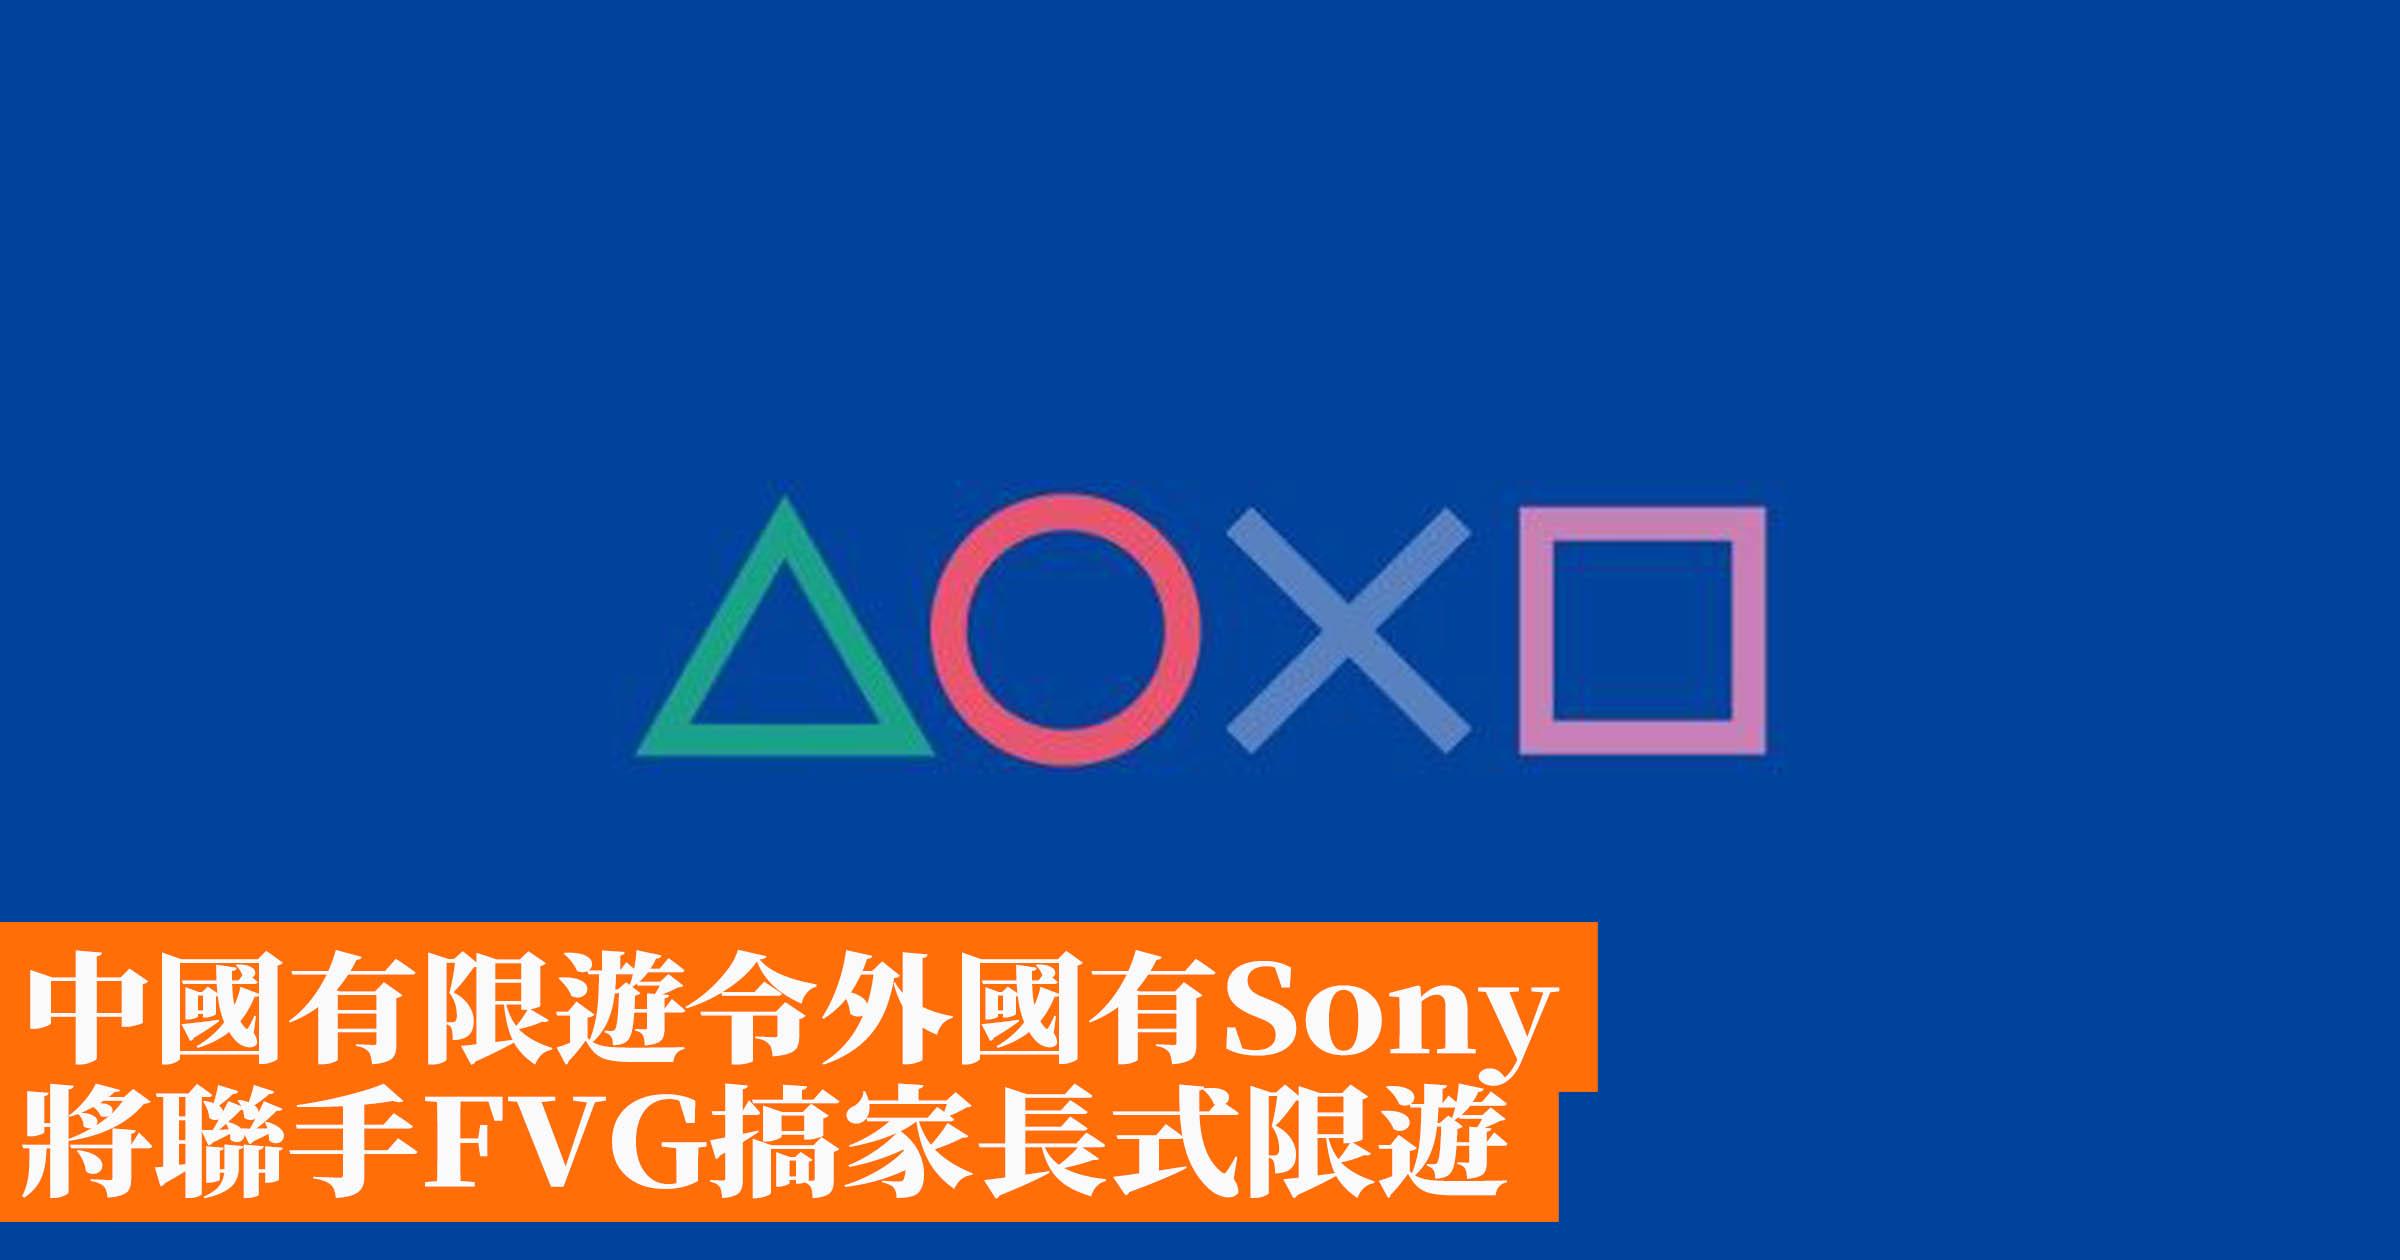 [閒聊] Sony將聯手FVG搞家長式限遊